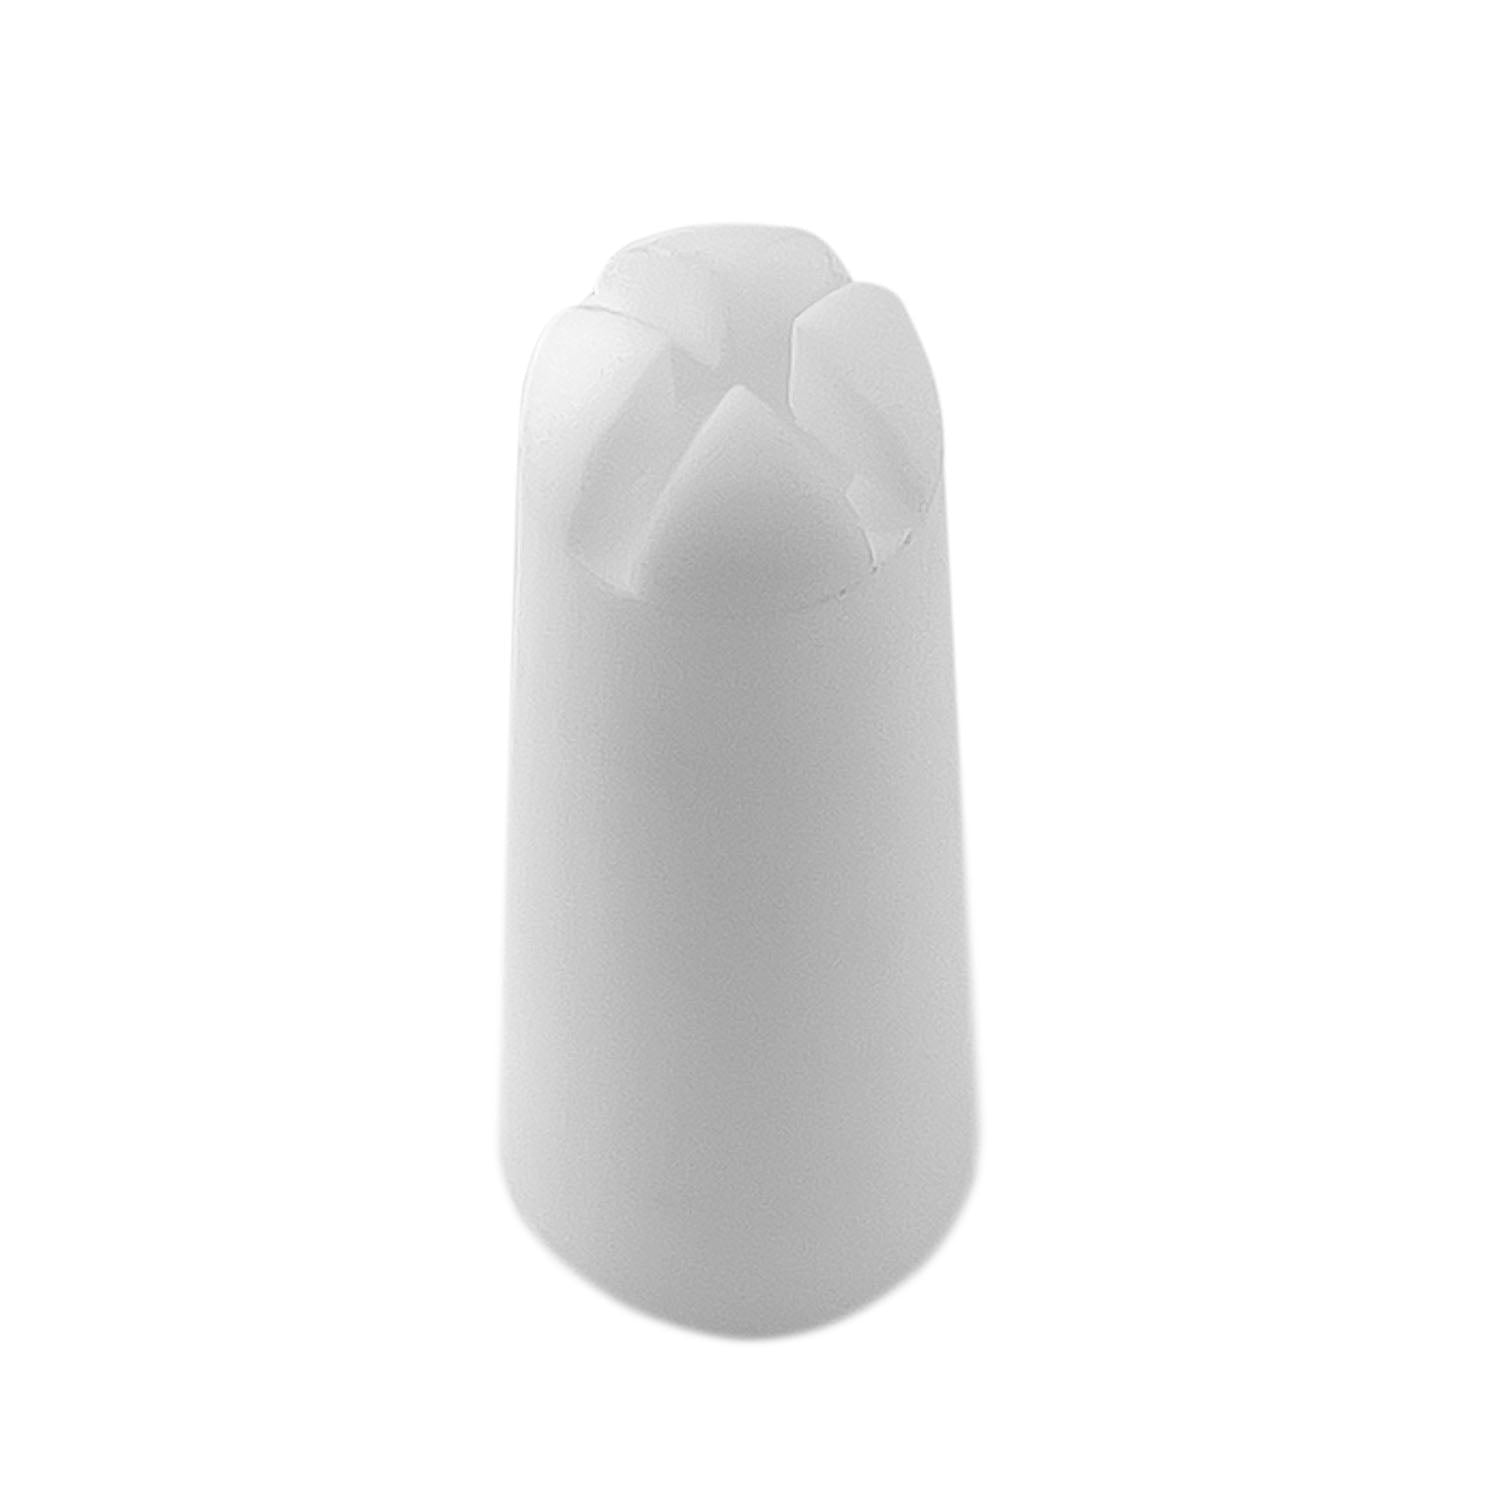 GorillaRock Whipped Cream Dispenser | Cream Whipper | + 3 Decorating Nozzles (1 L)